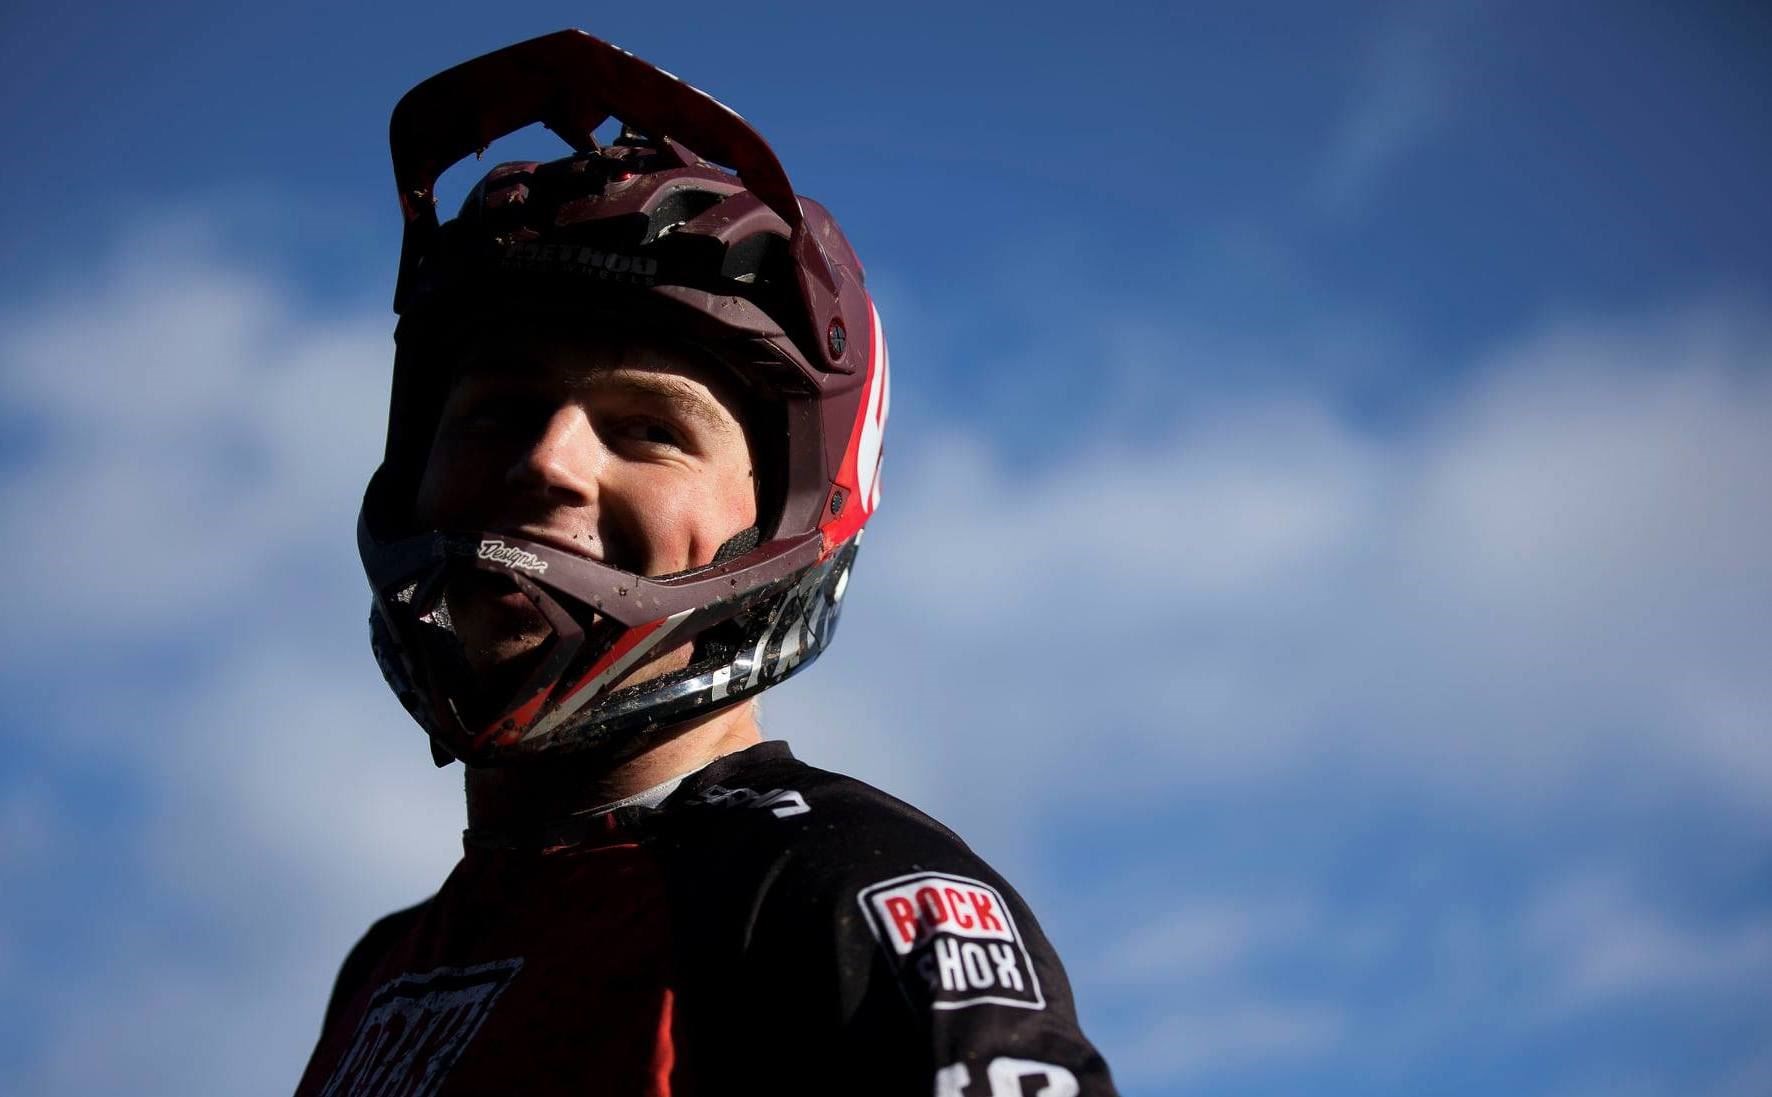 Jamie Edmondson, world enduro under 21 mountain bike champion